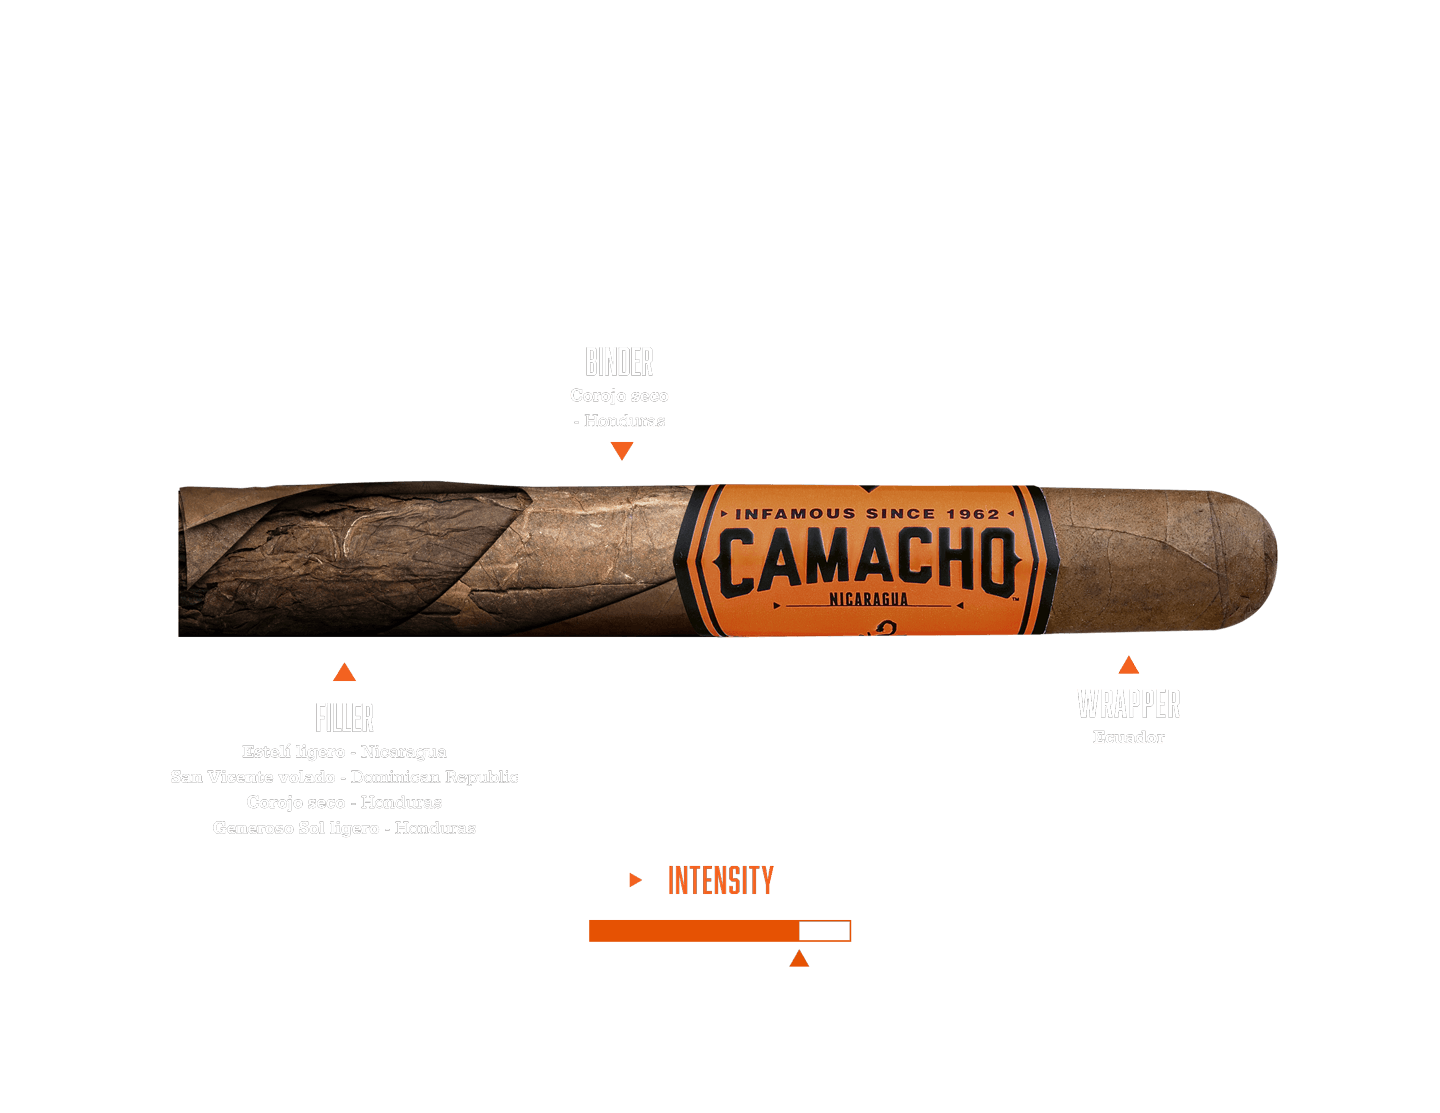 Cigar and blend description of the Camacho Nicaragua Cigar